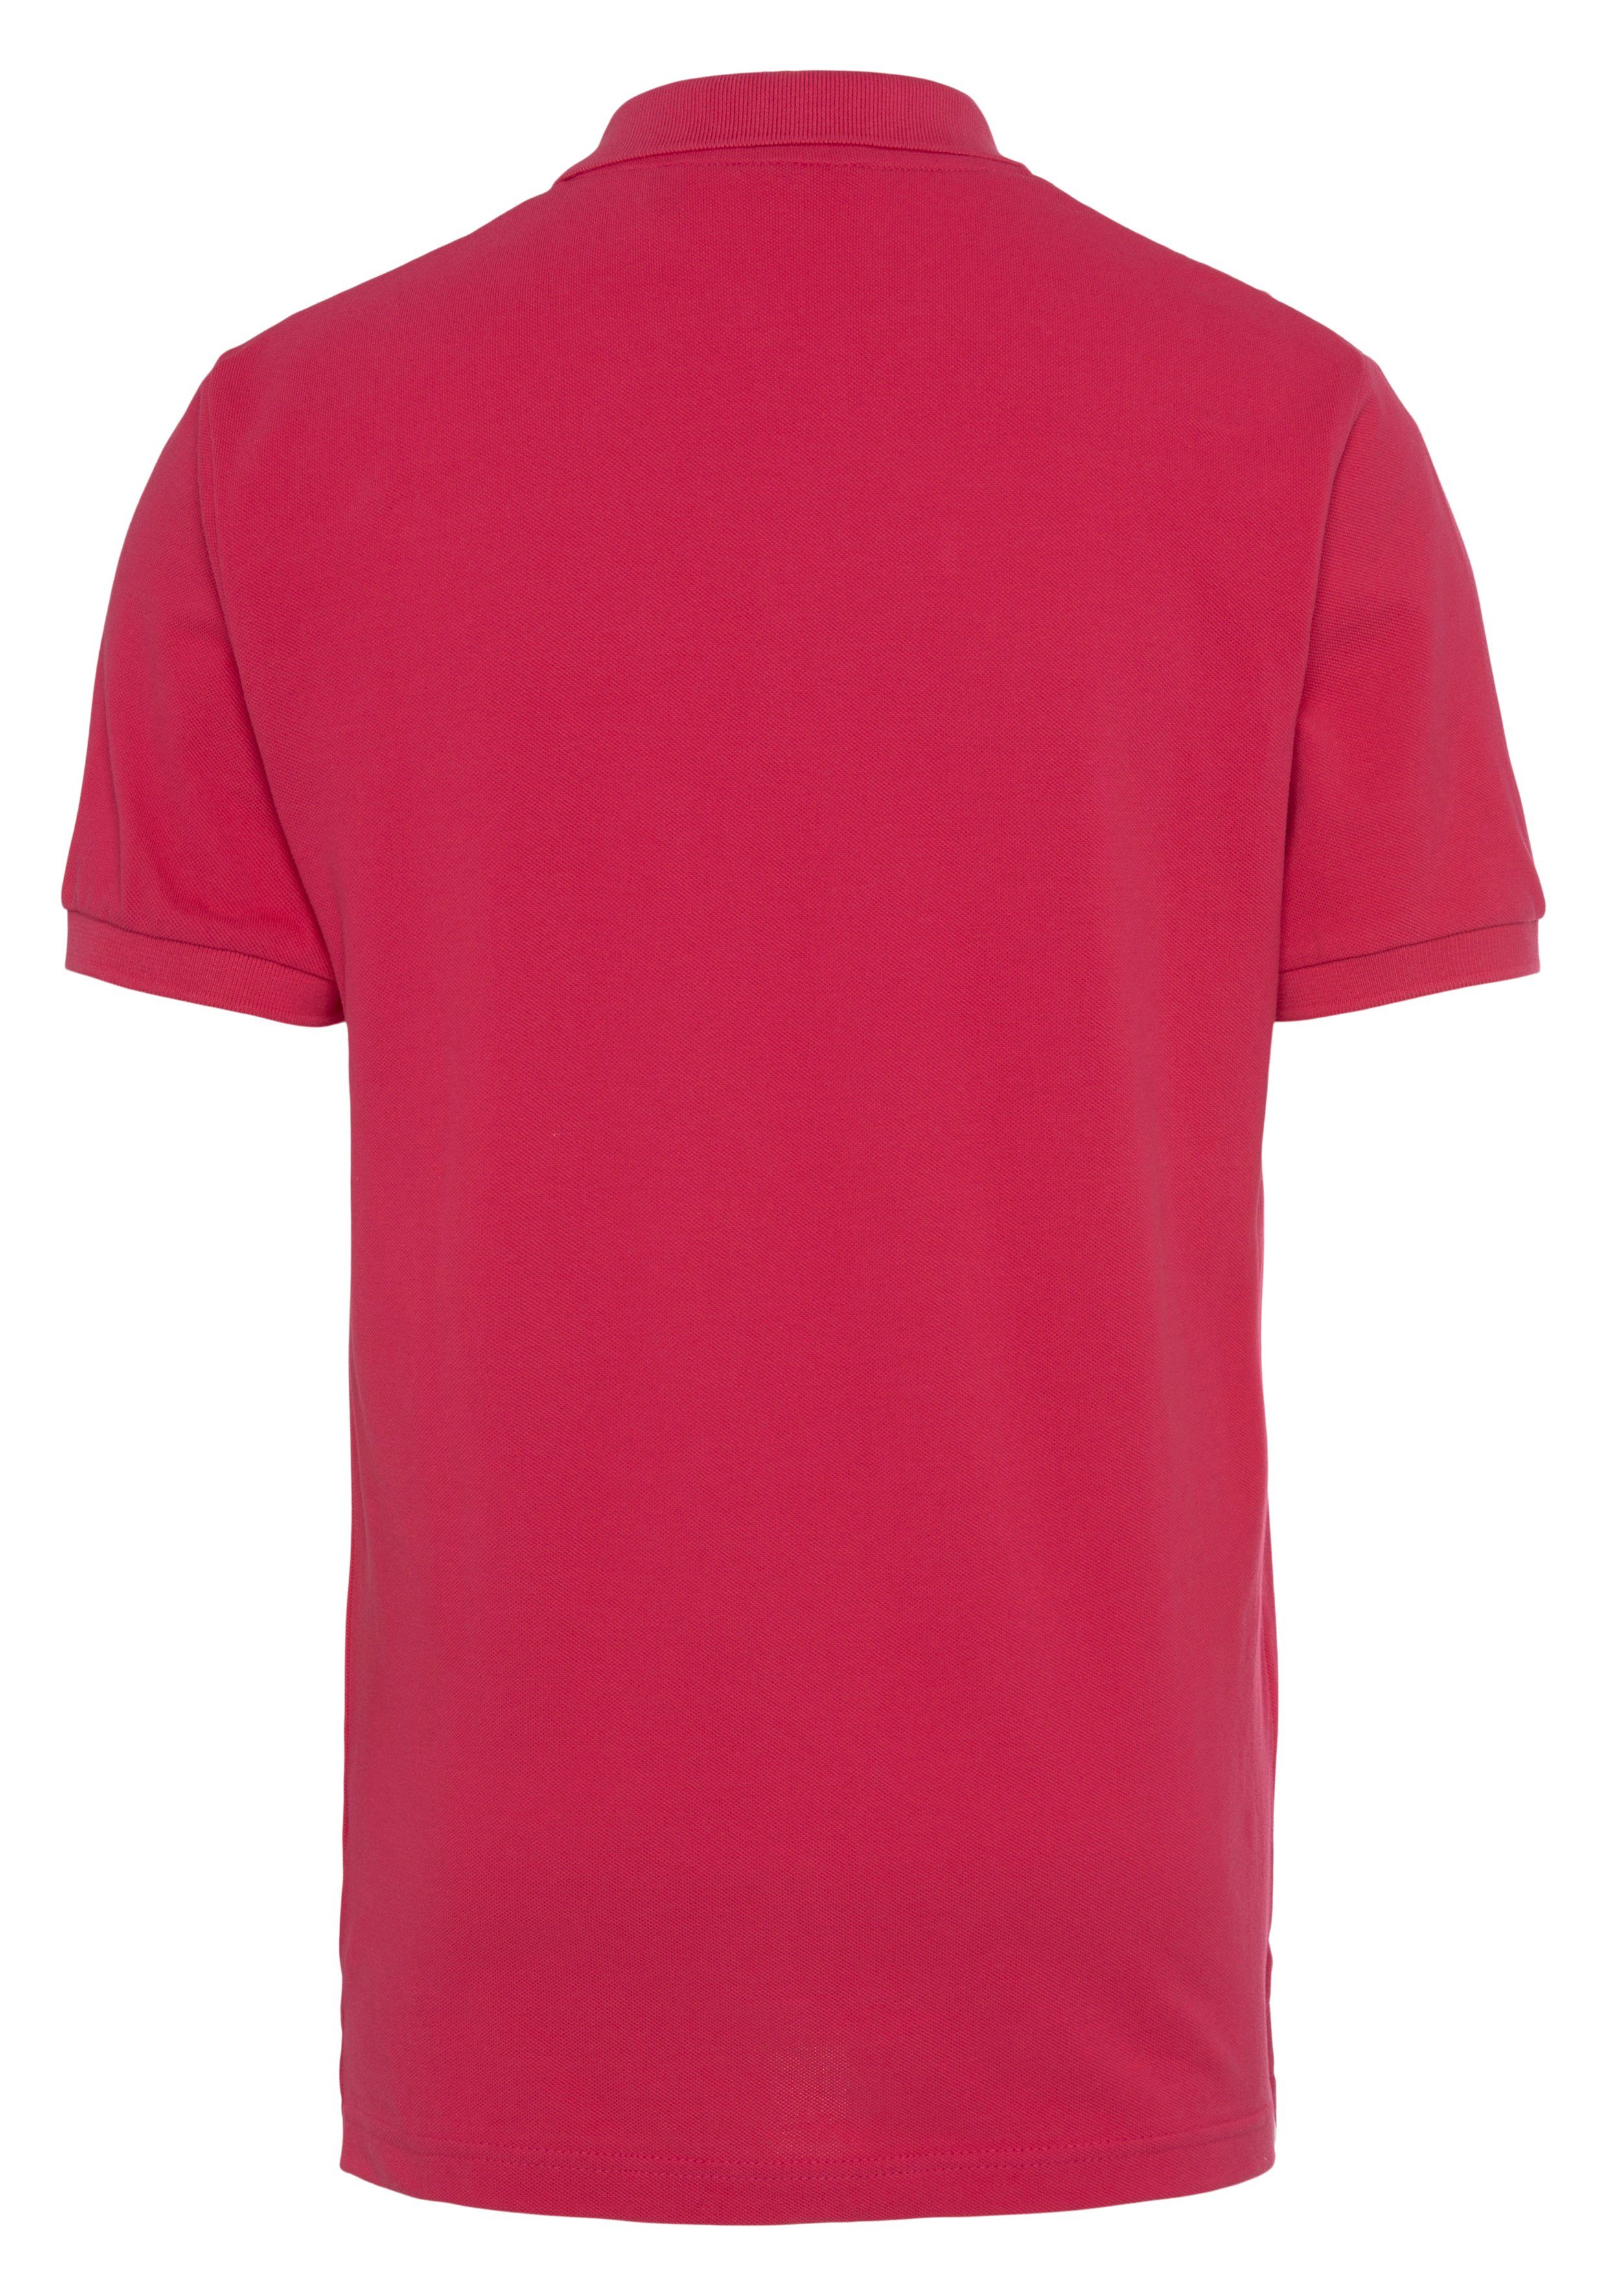 Gant Regular Smart Shirt, Poloshirt Premium mag.pink Qualität MD. Casual, PIQUE KA Fit, RUGGER Piqué-Polo